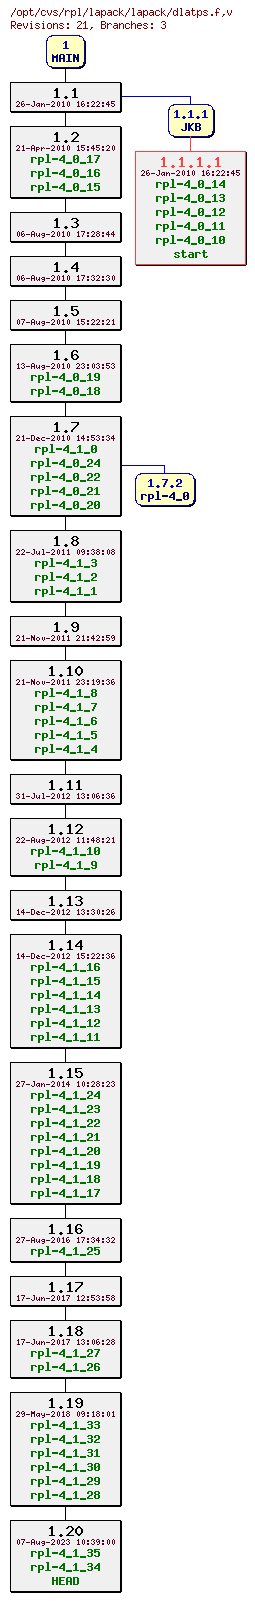 Revision graph of rpl/lapack/lapack/dlatps.f